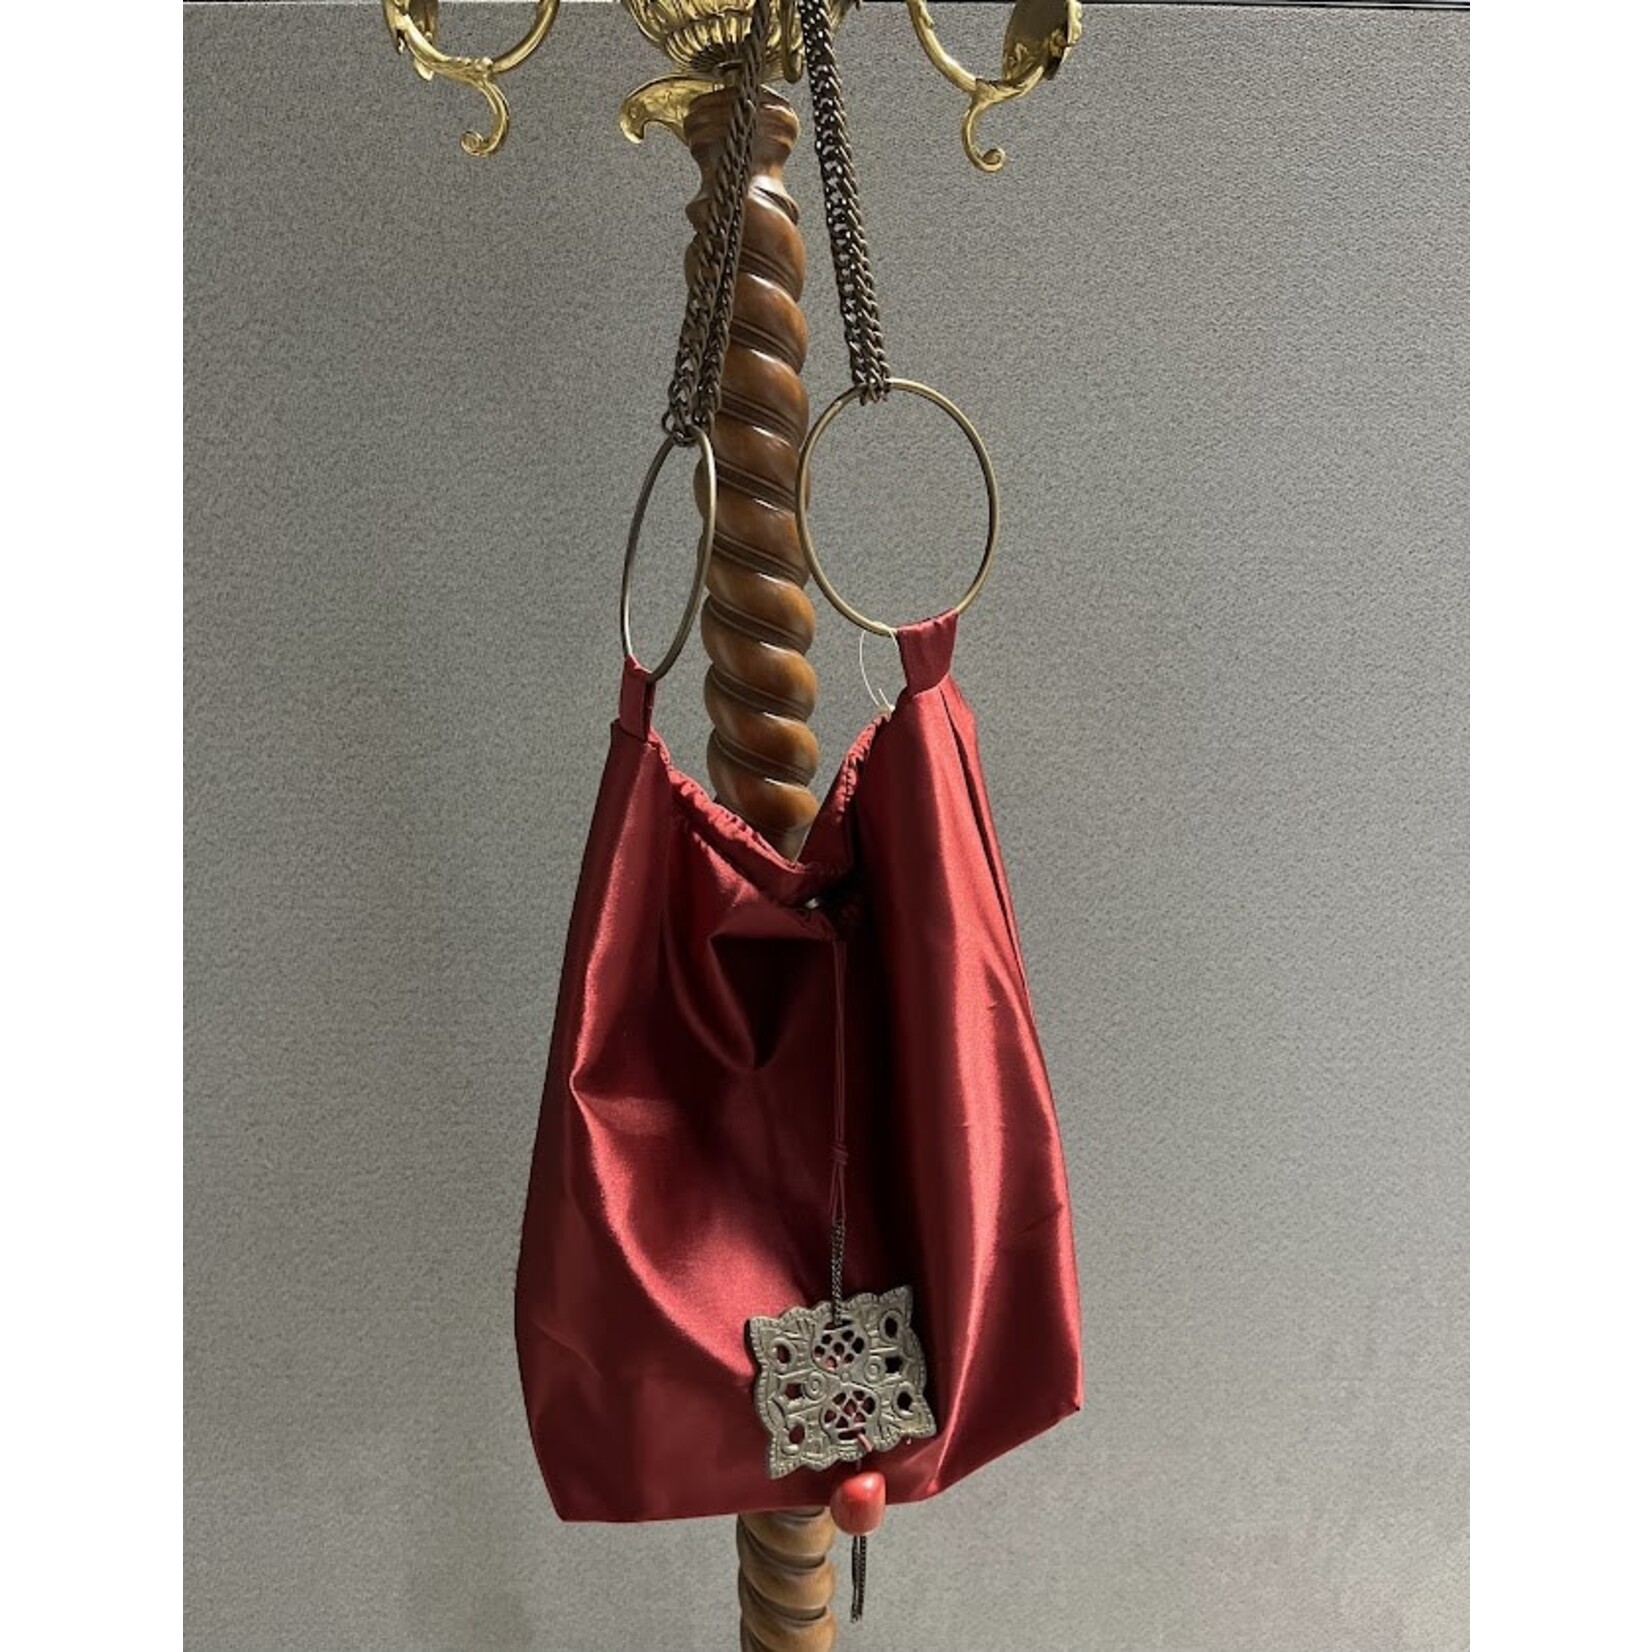 Saro Trading Company Burgundy Handbag with Bronze Strap